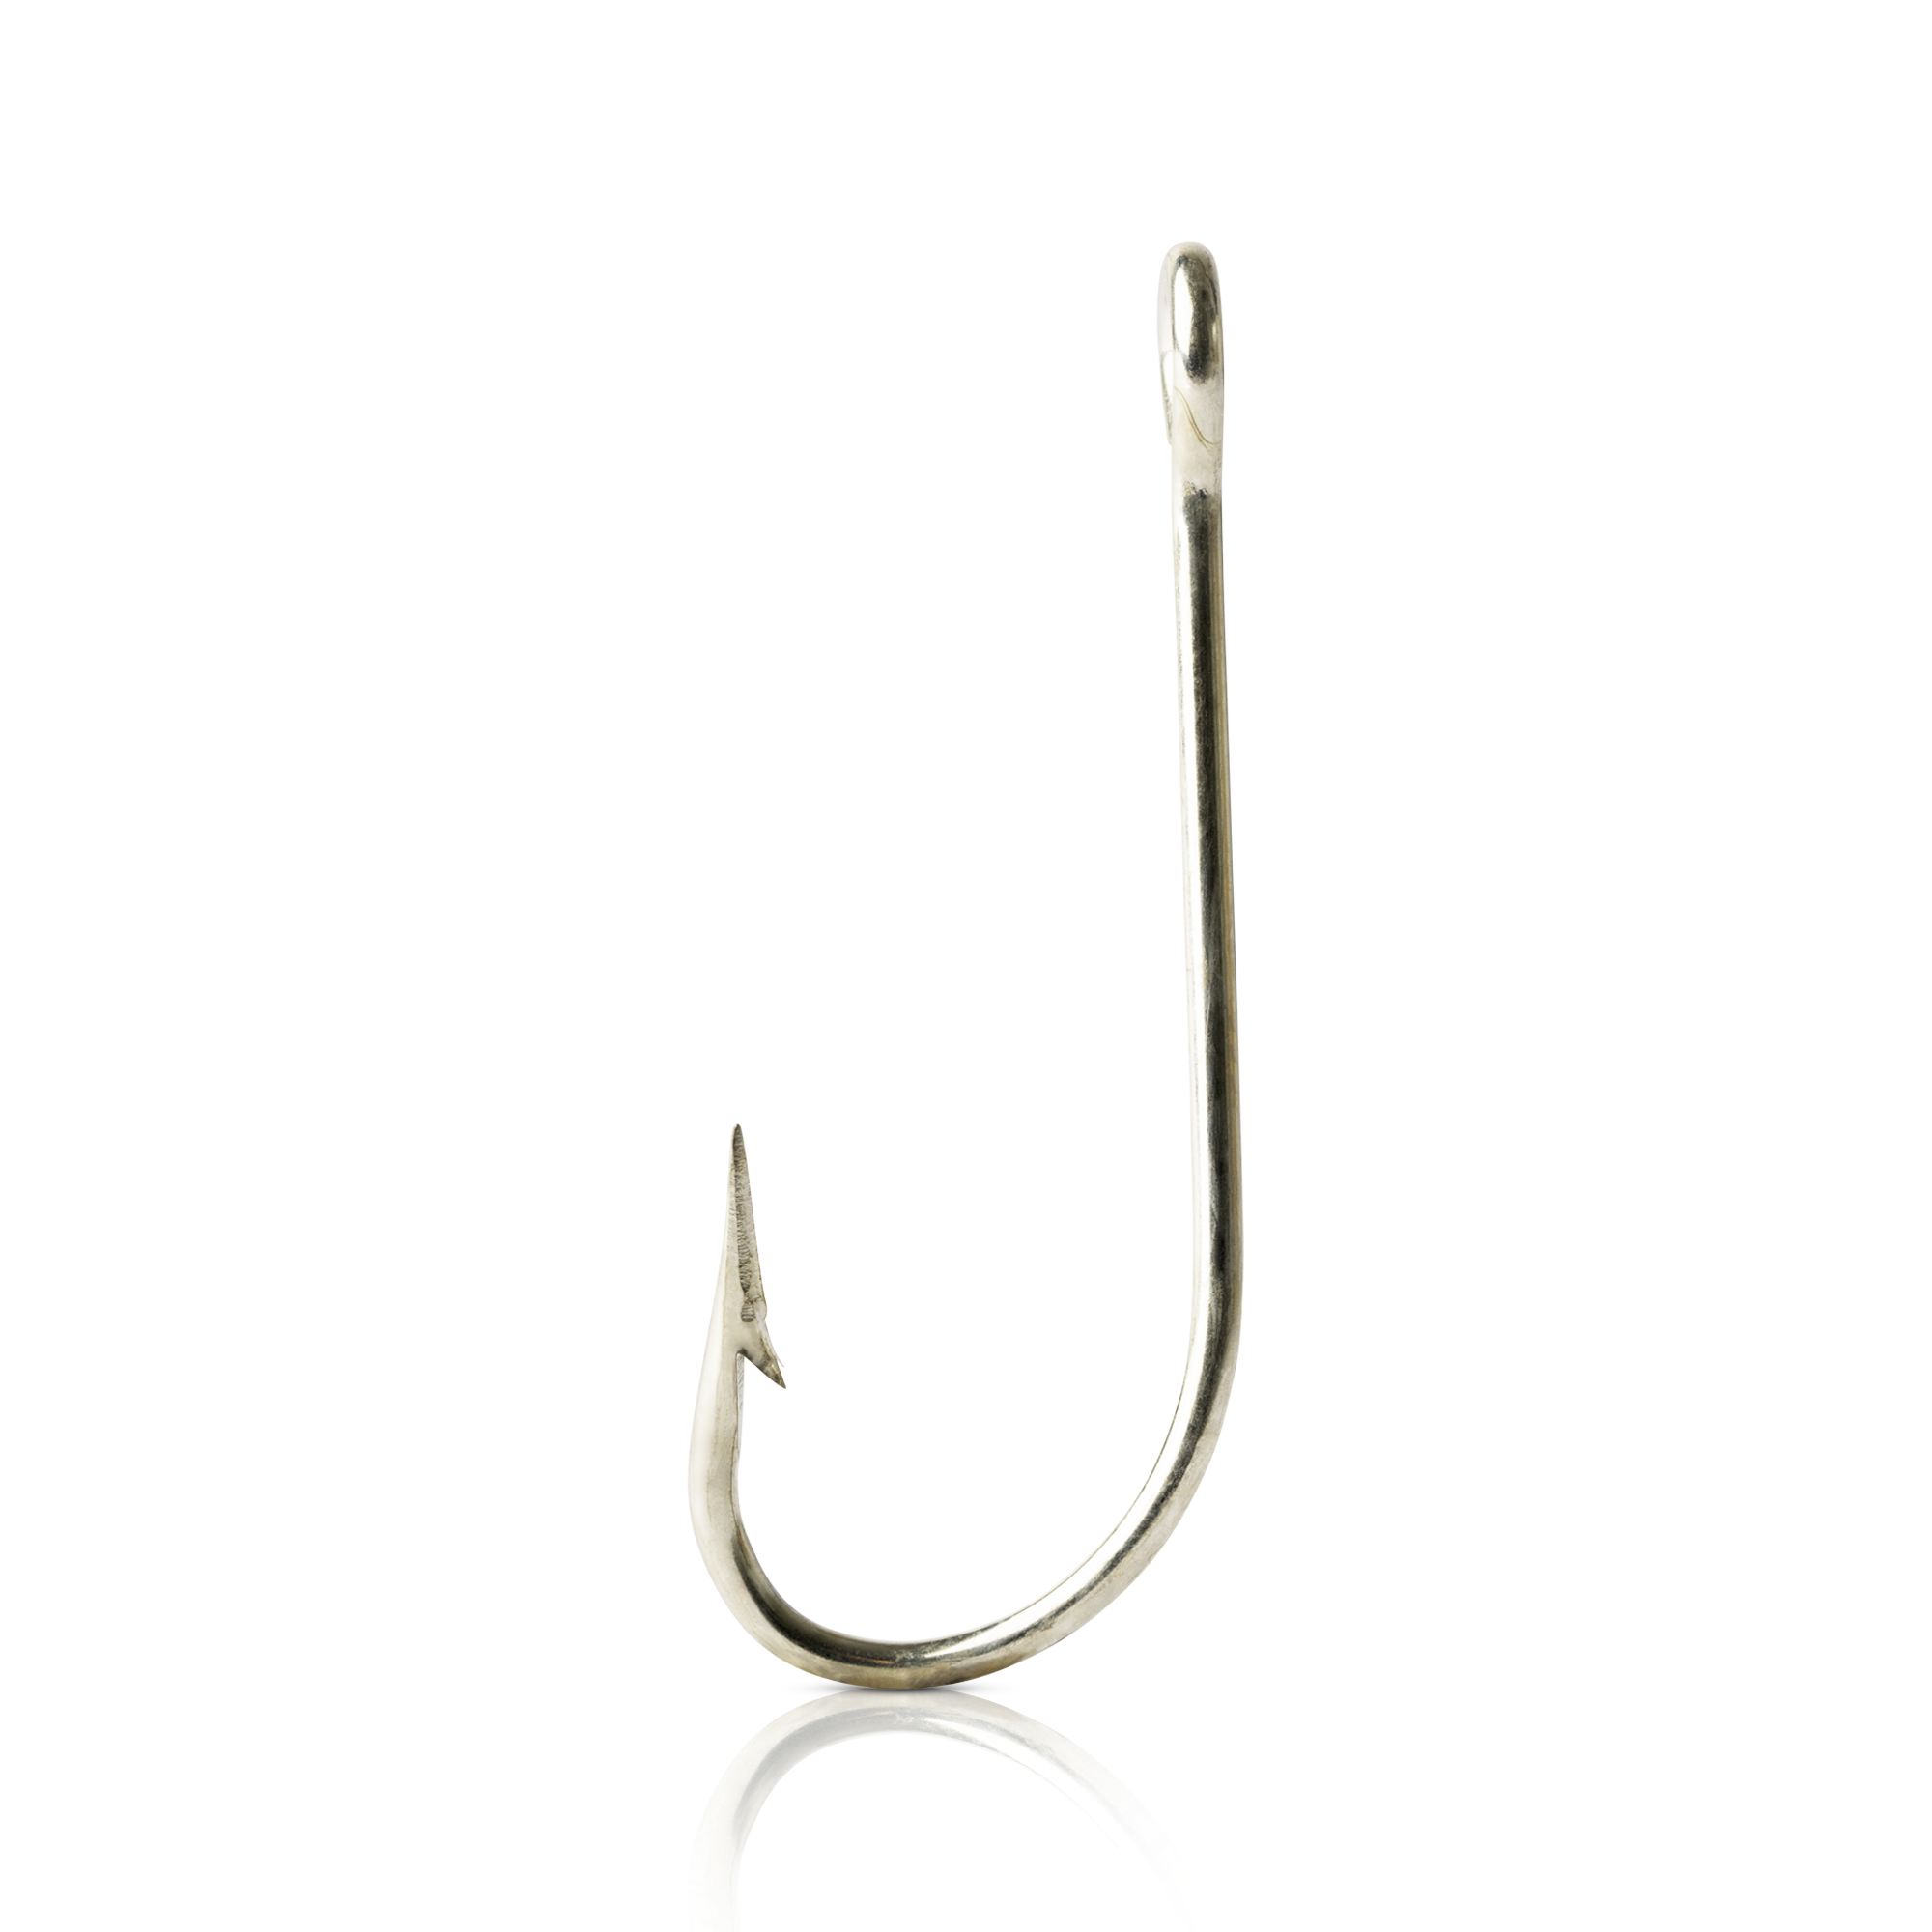 100x Mustad 4540 1/2 Bronze Long Shank Kirby Fishing Hooks - Size 4